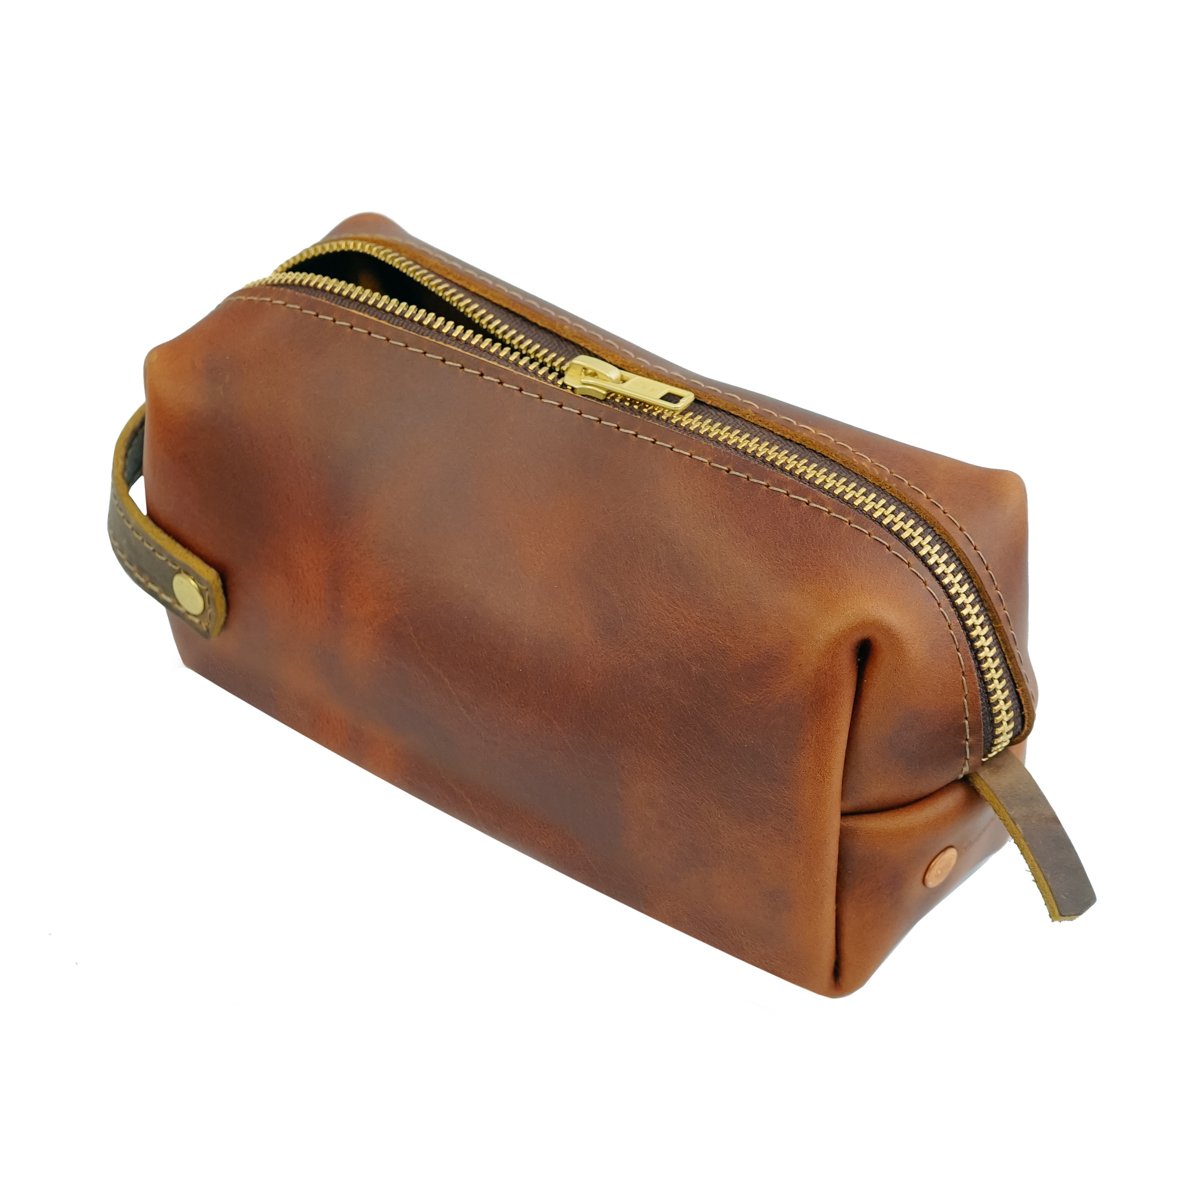 New Men's Business Clutch Wrist Bag Travel Pouch Hand Bag Bath bag Shaving  bag